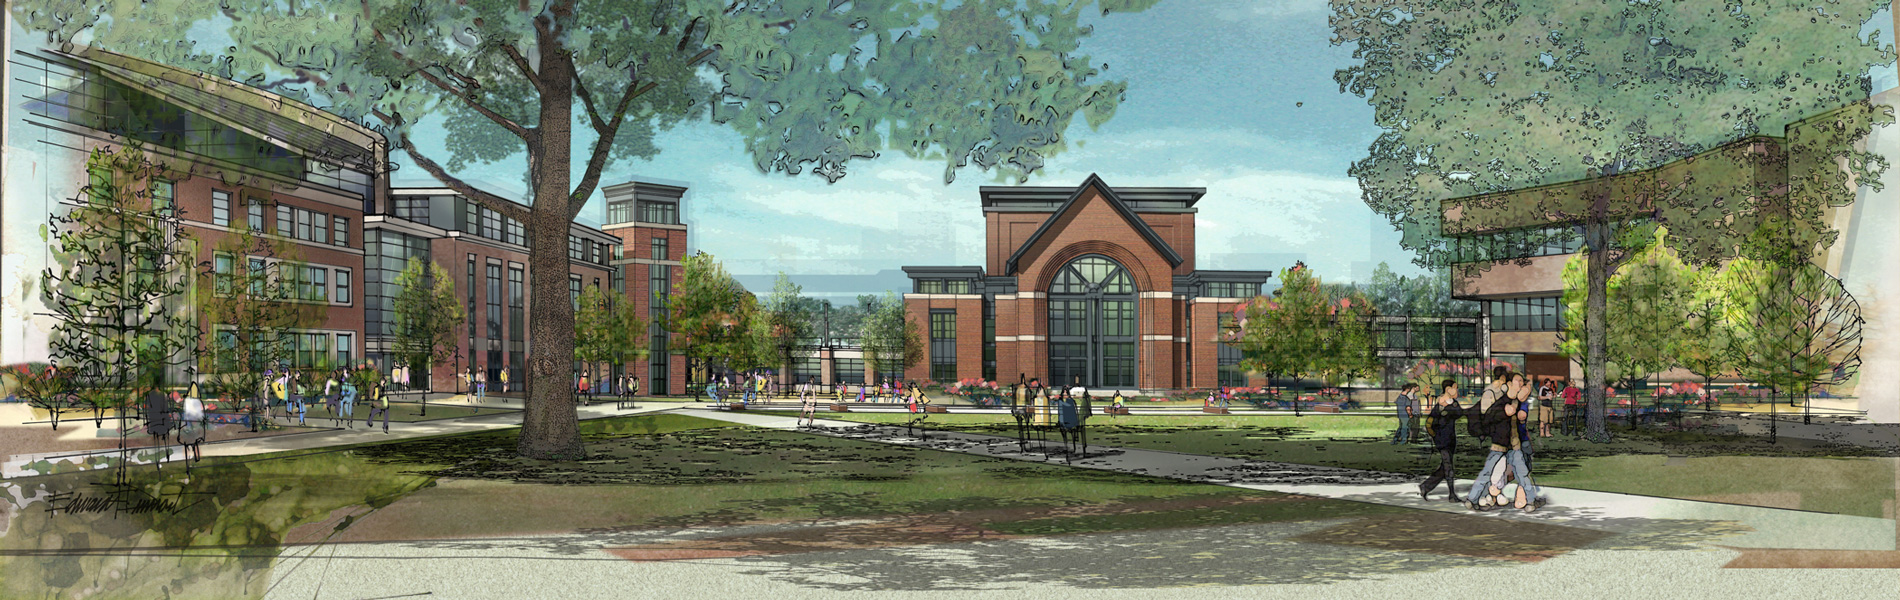 University of Vermont Davis Student Center rendering of the Quad